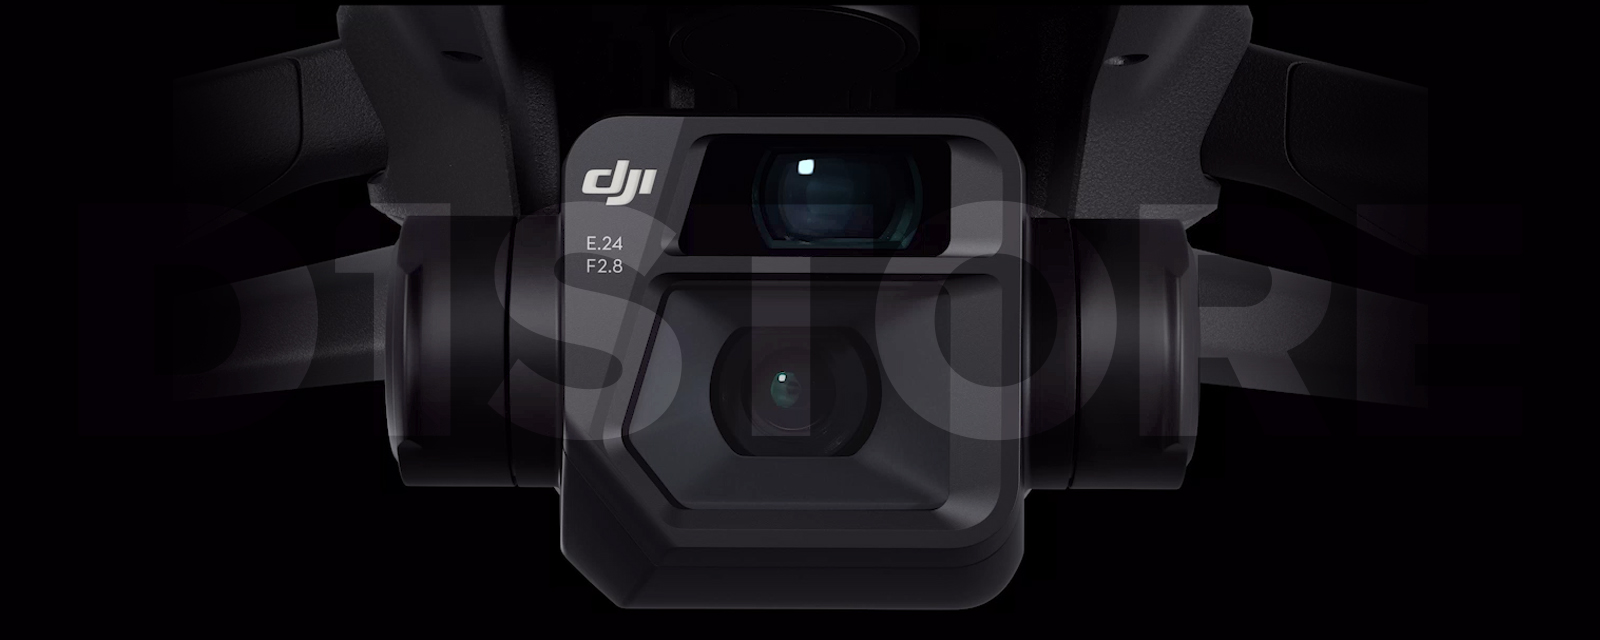 DJI Mavic 3 Enterprise - Dual Cameras | Best Price Guarantee at D1 Enterprise Australia